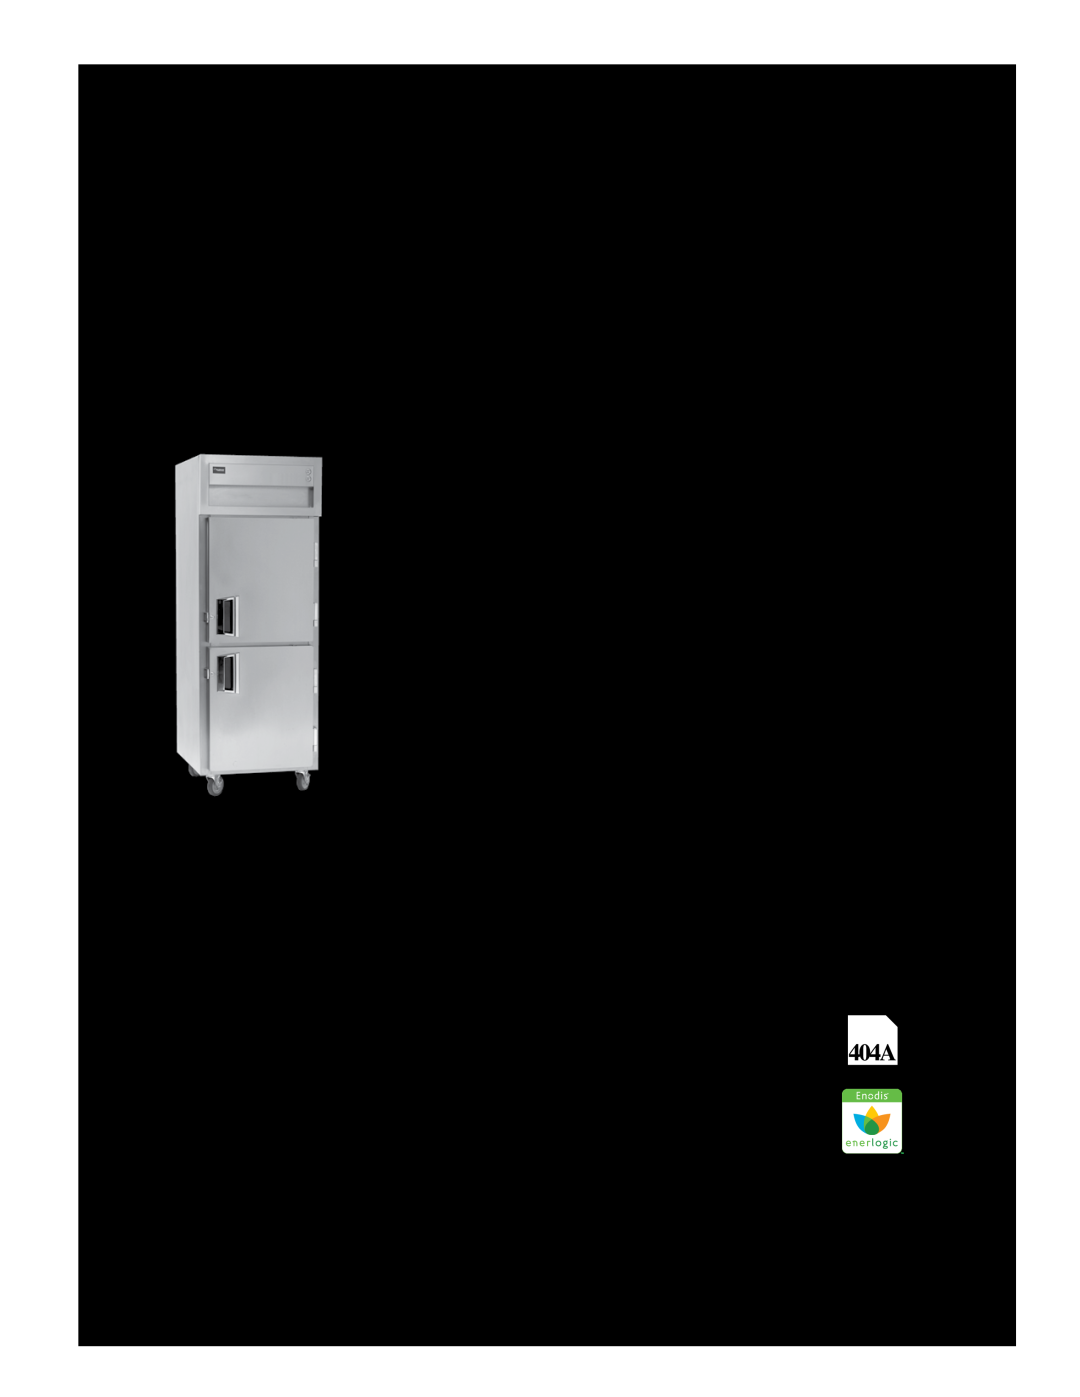 Delfield SSDP1-SH specifications Specification Line, Delfield, Solid Door Single Section Dual Temp Refrigerator, Models 